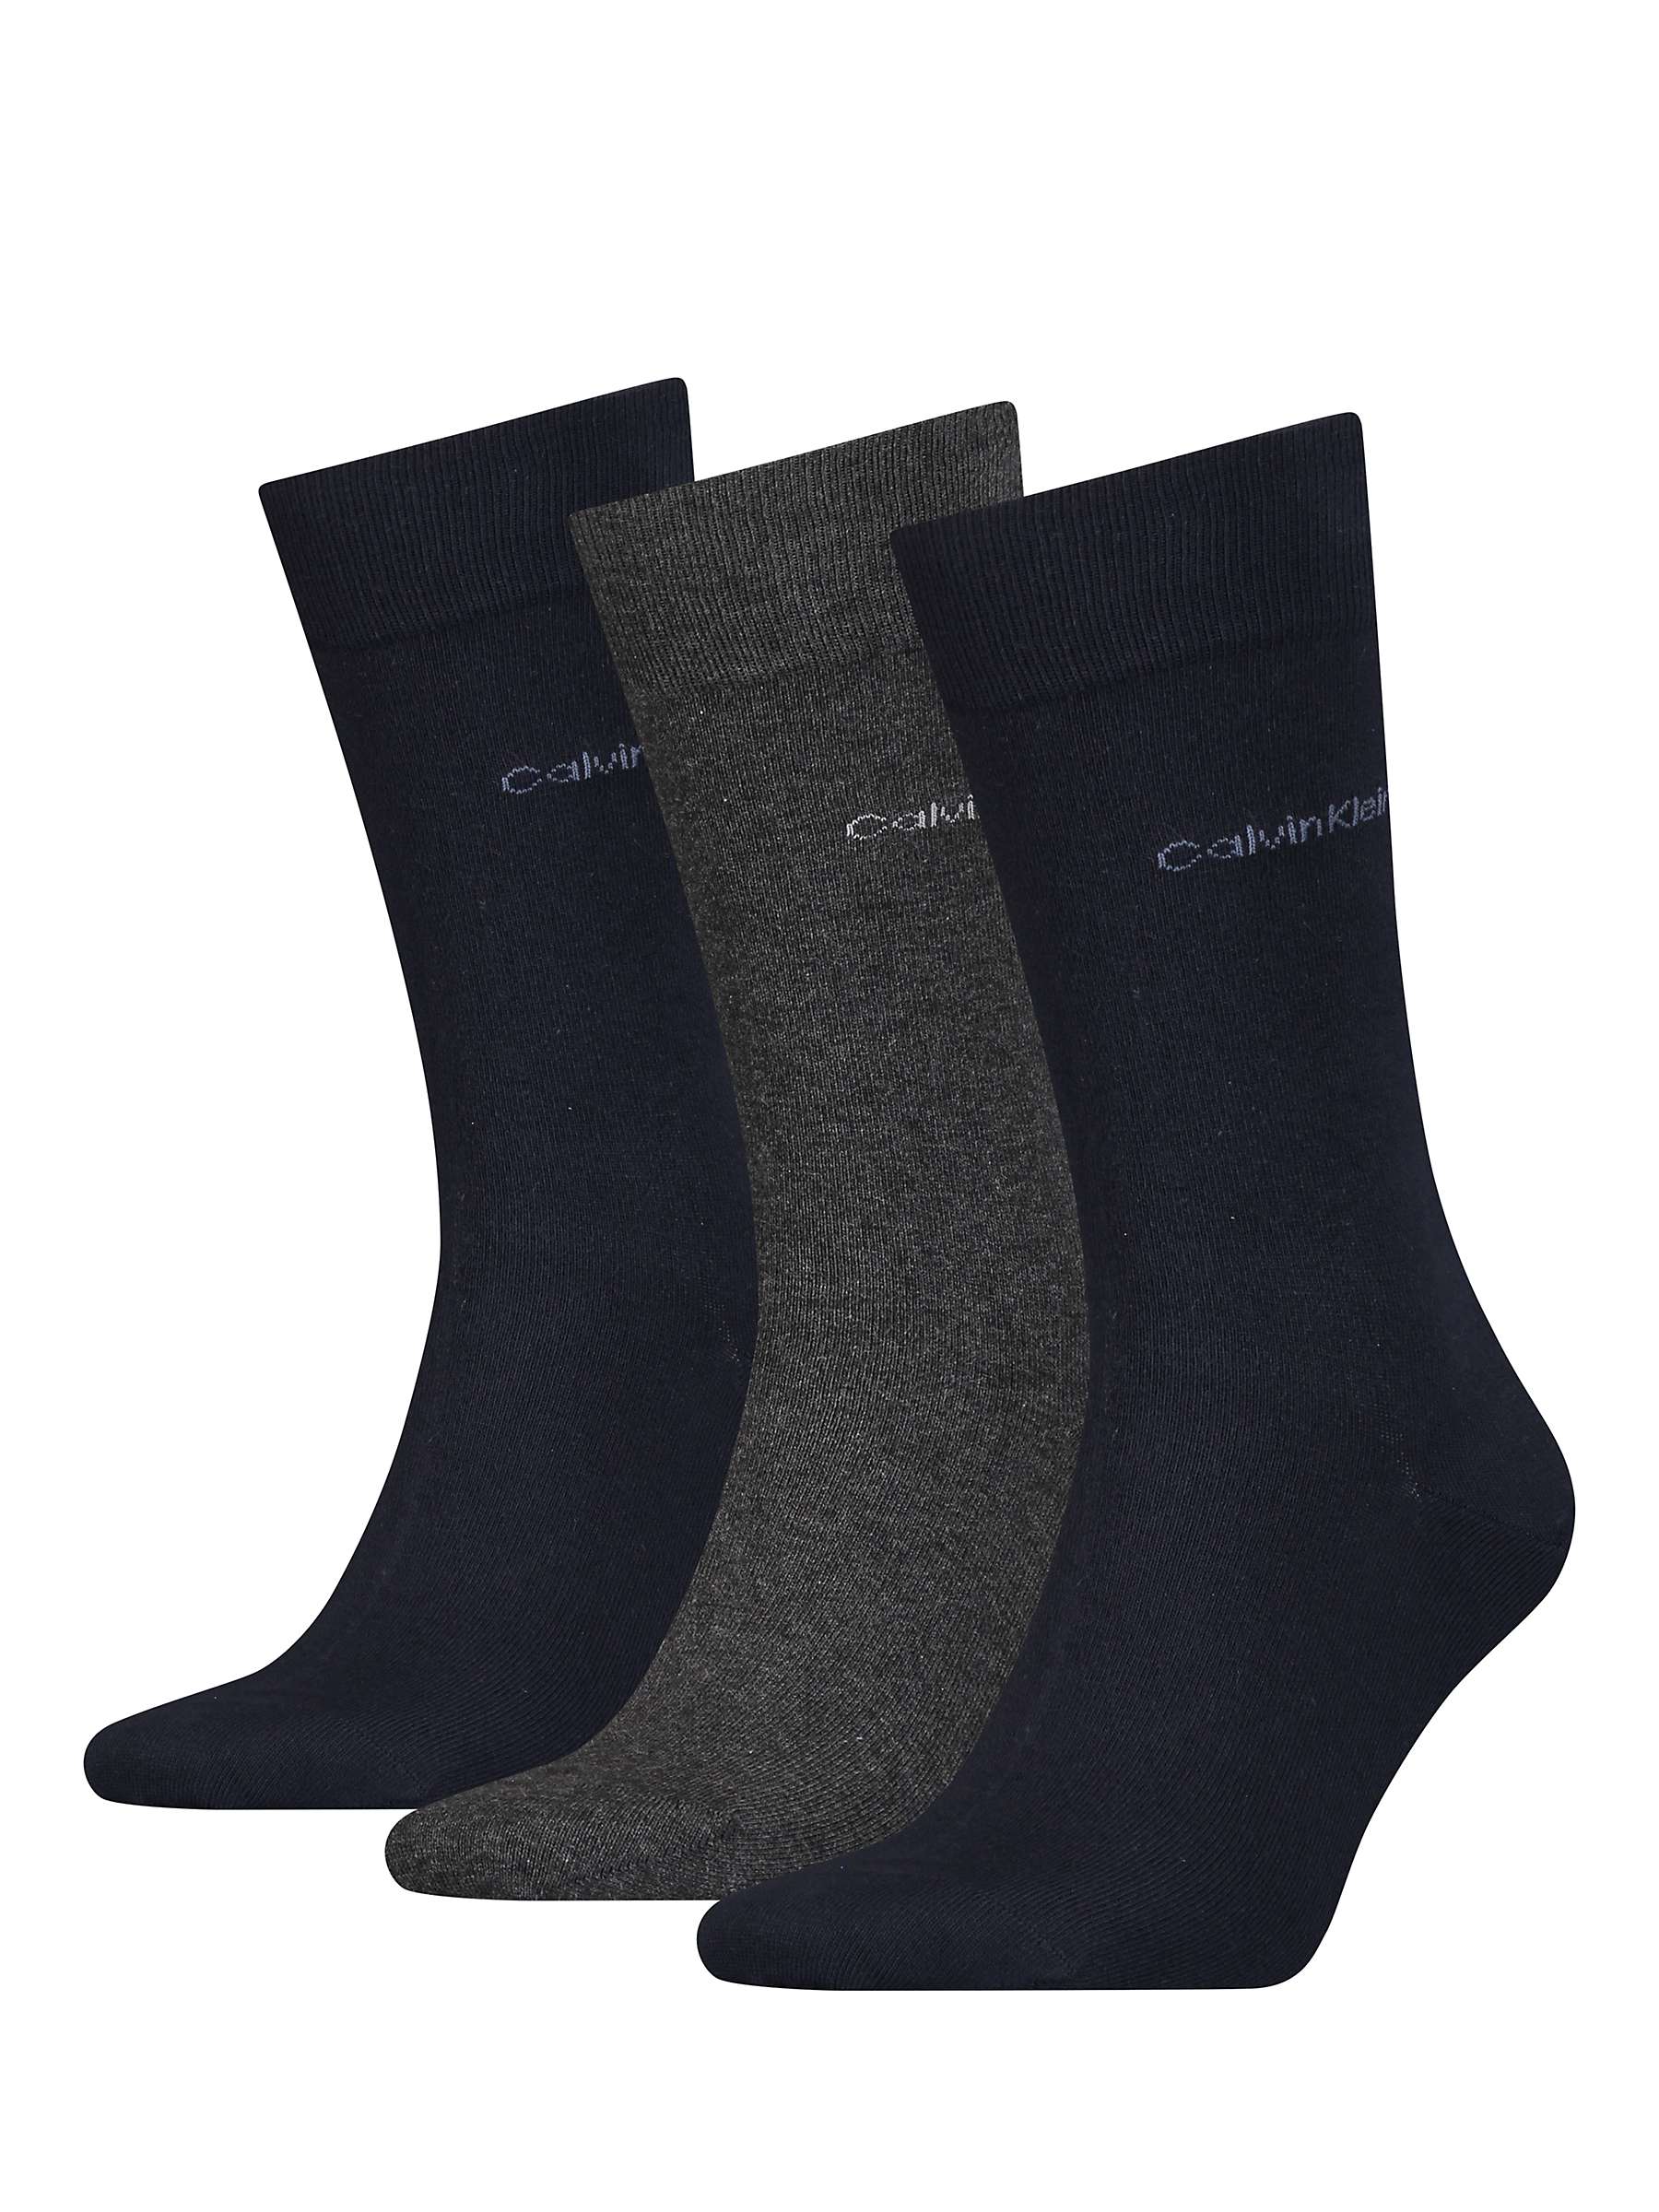 Calvin Klein Crew Socks, One Size, Pack of 3, Navy/Grey at John Lewis ...